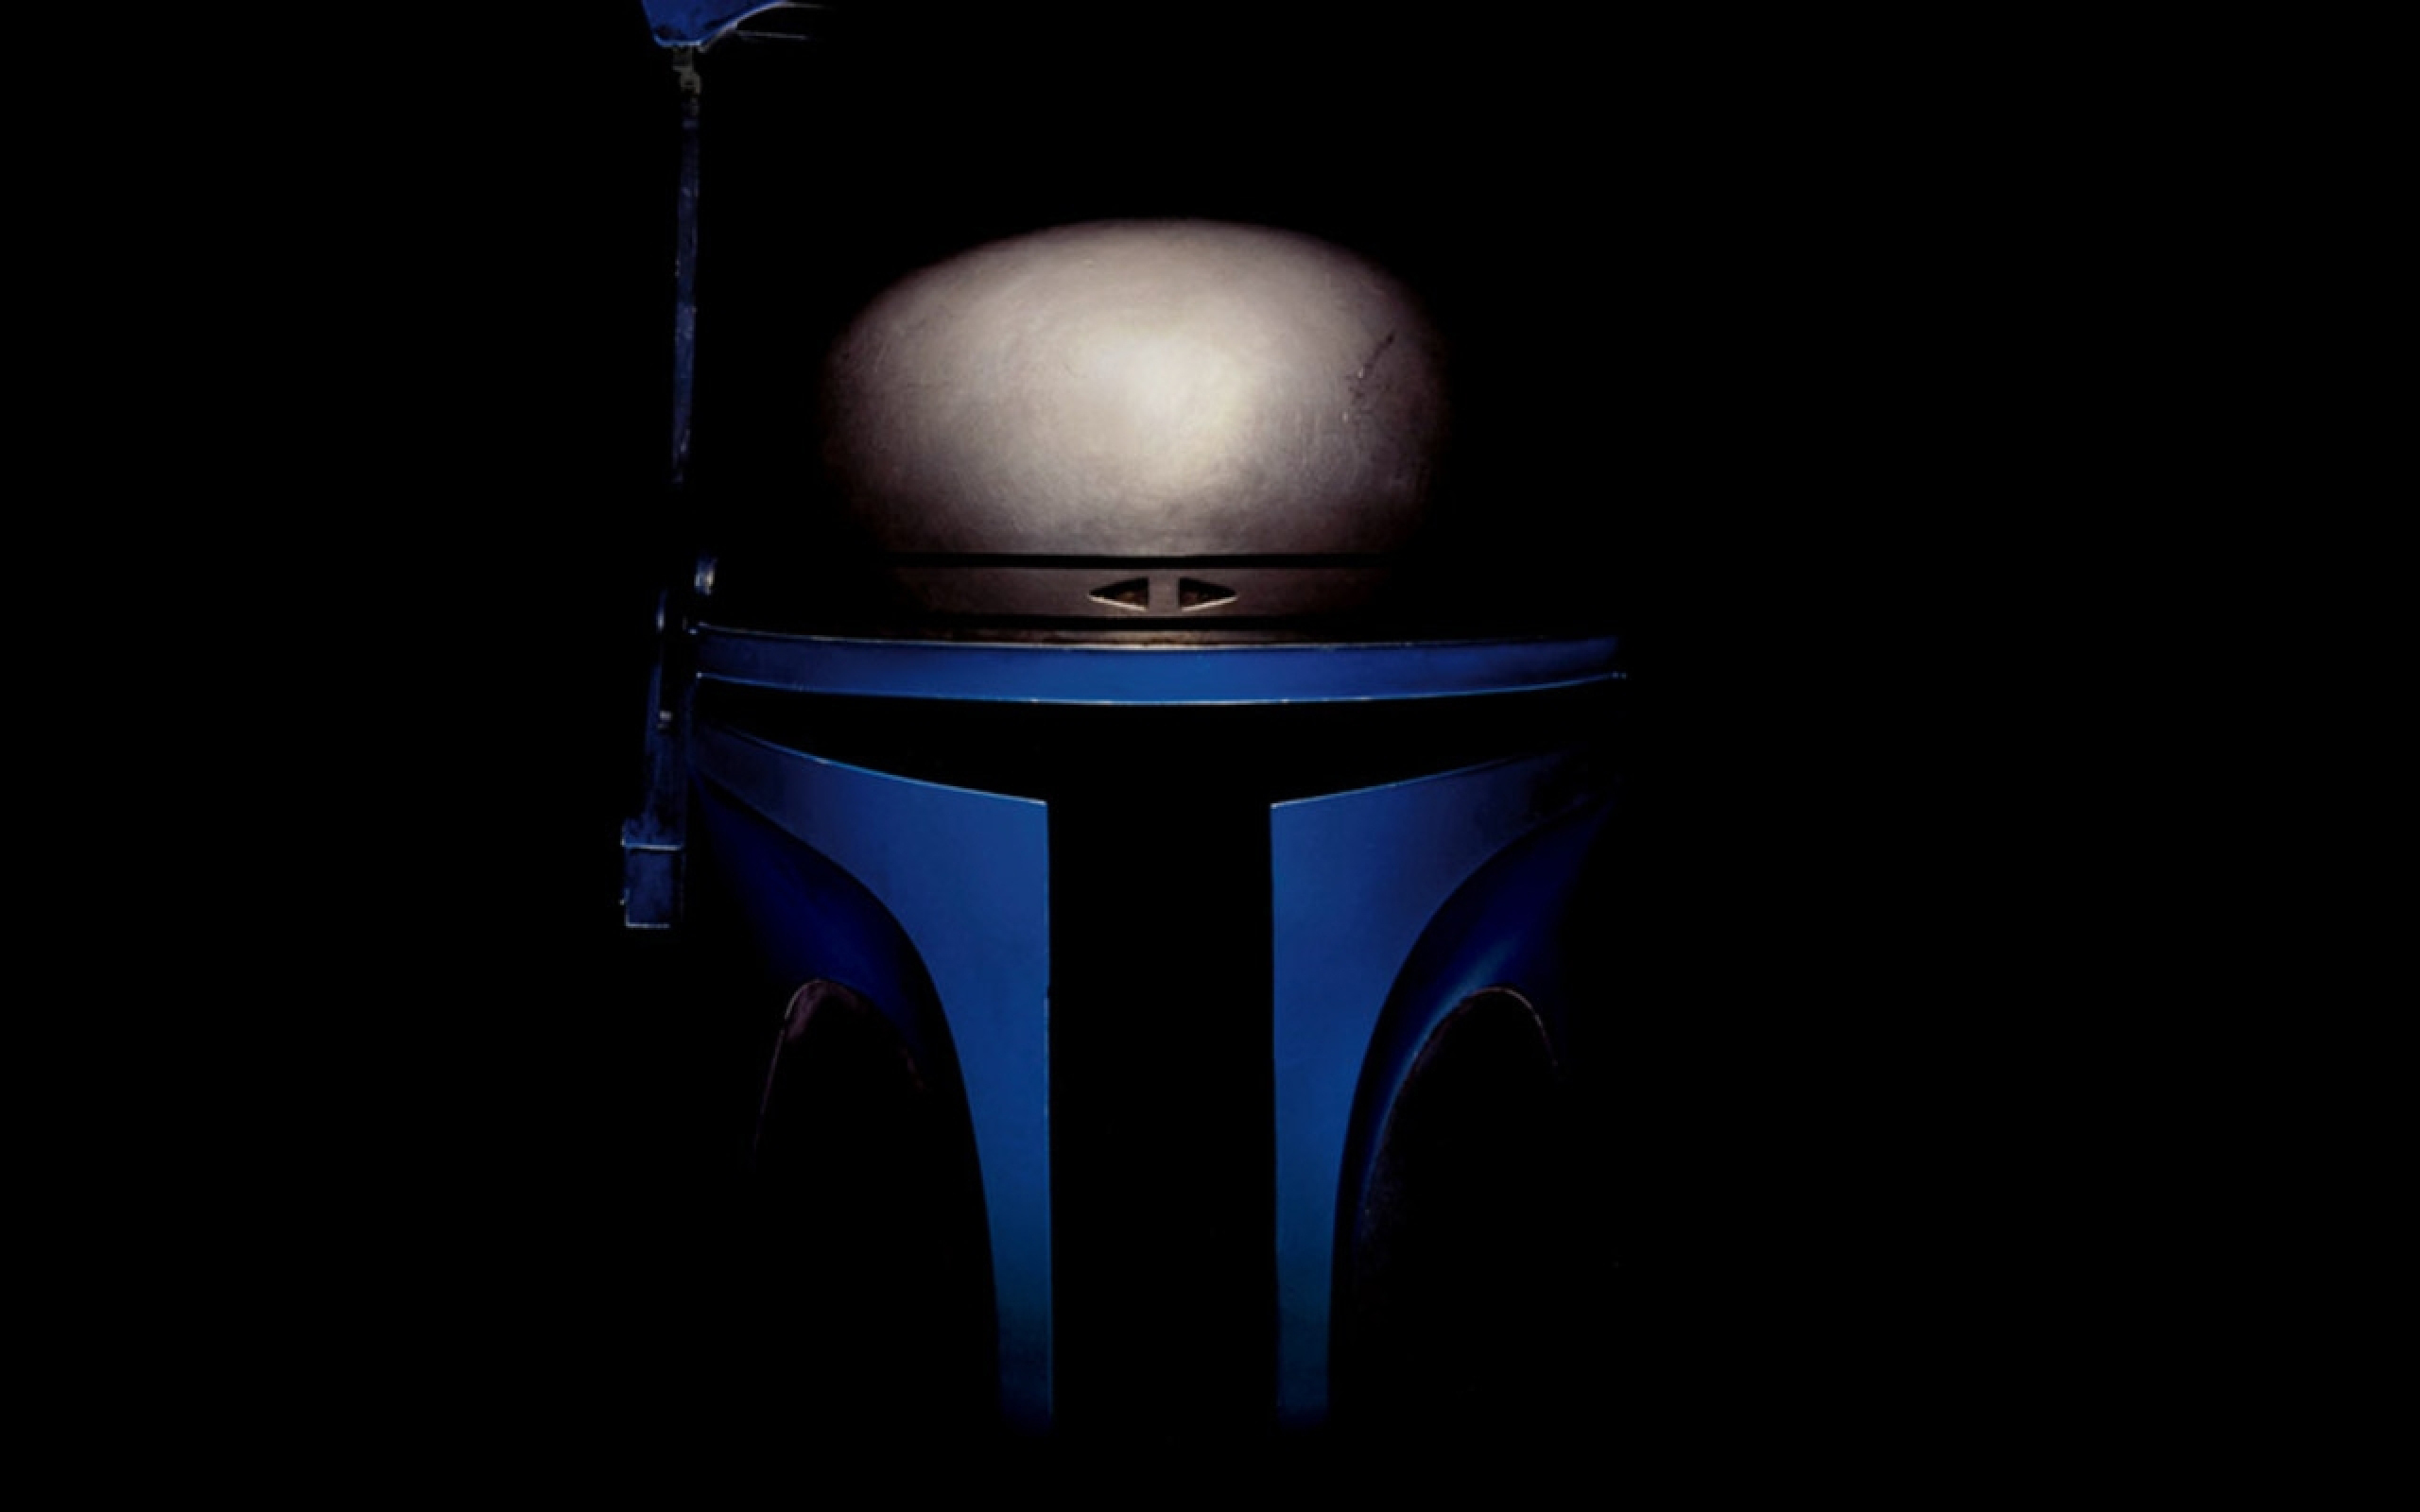 Movie Star Wars HD Wallpaper | Background Image